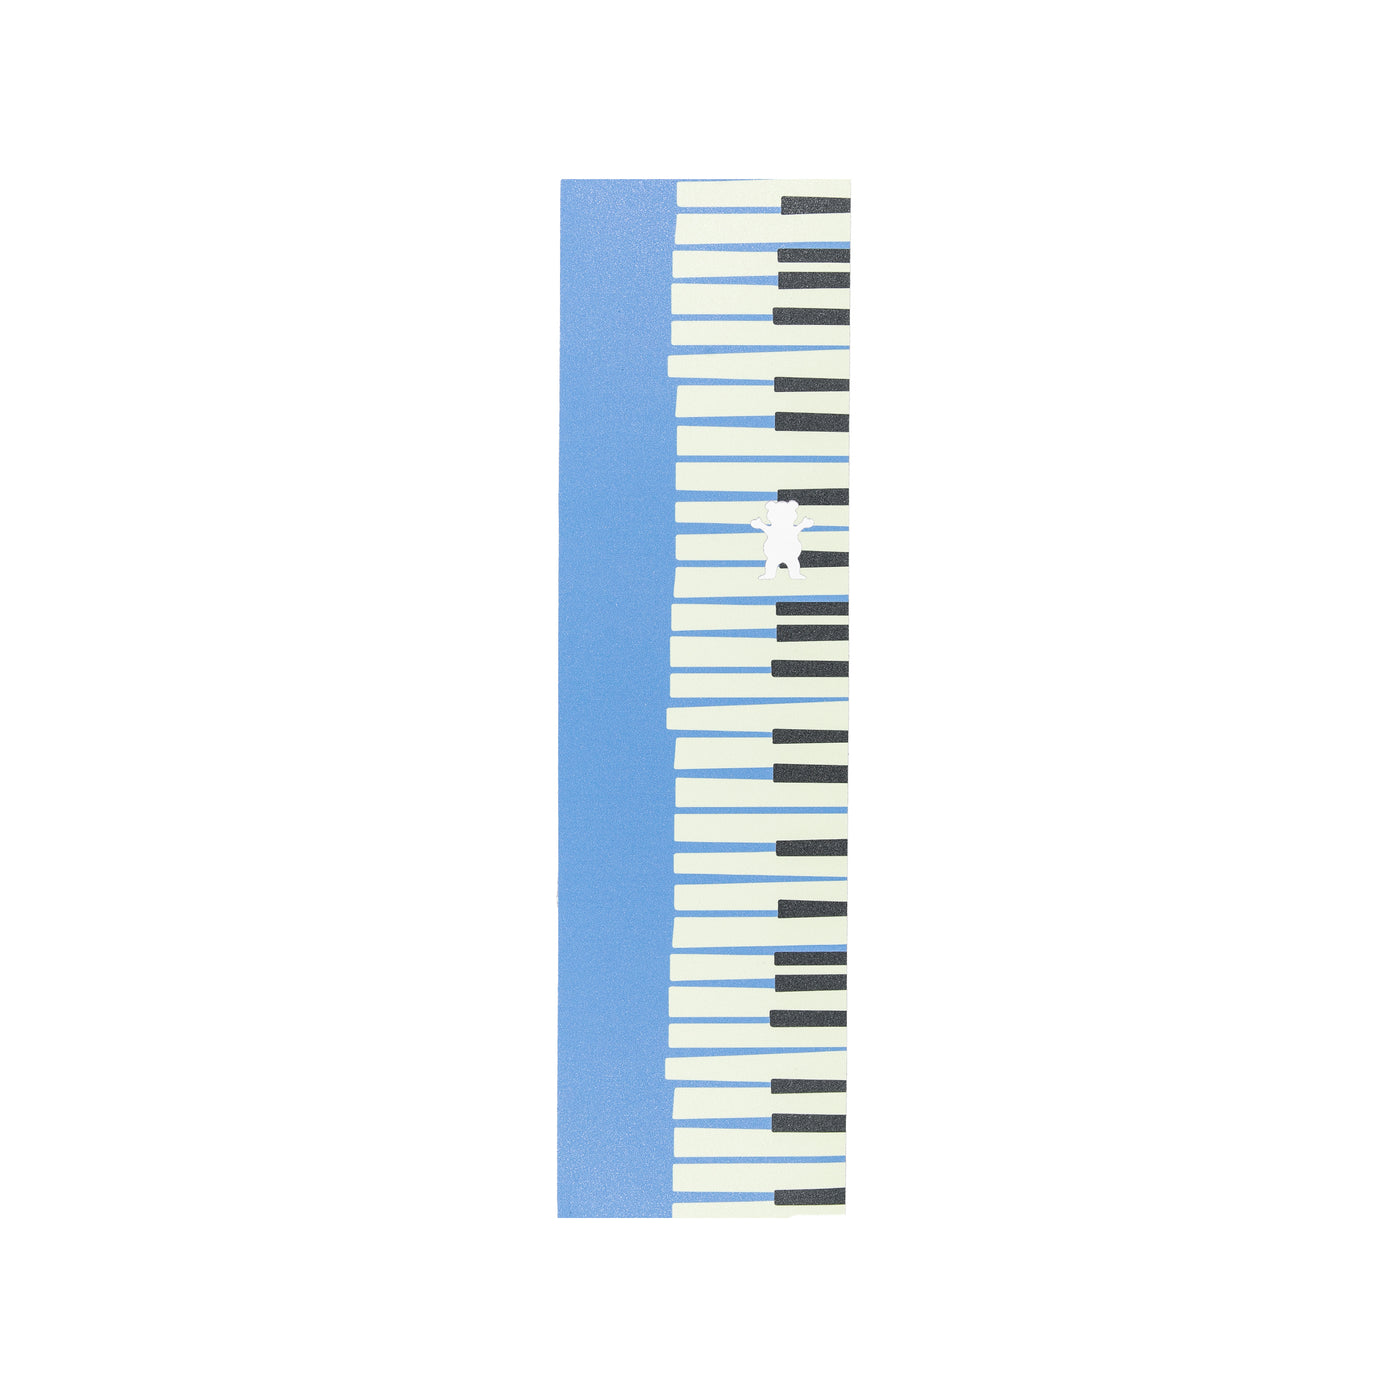 88 Keys Griptape Sheet - Blue